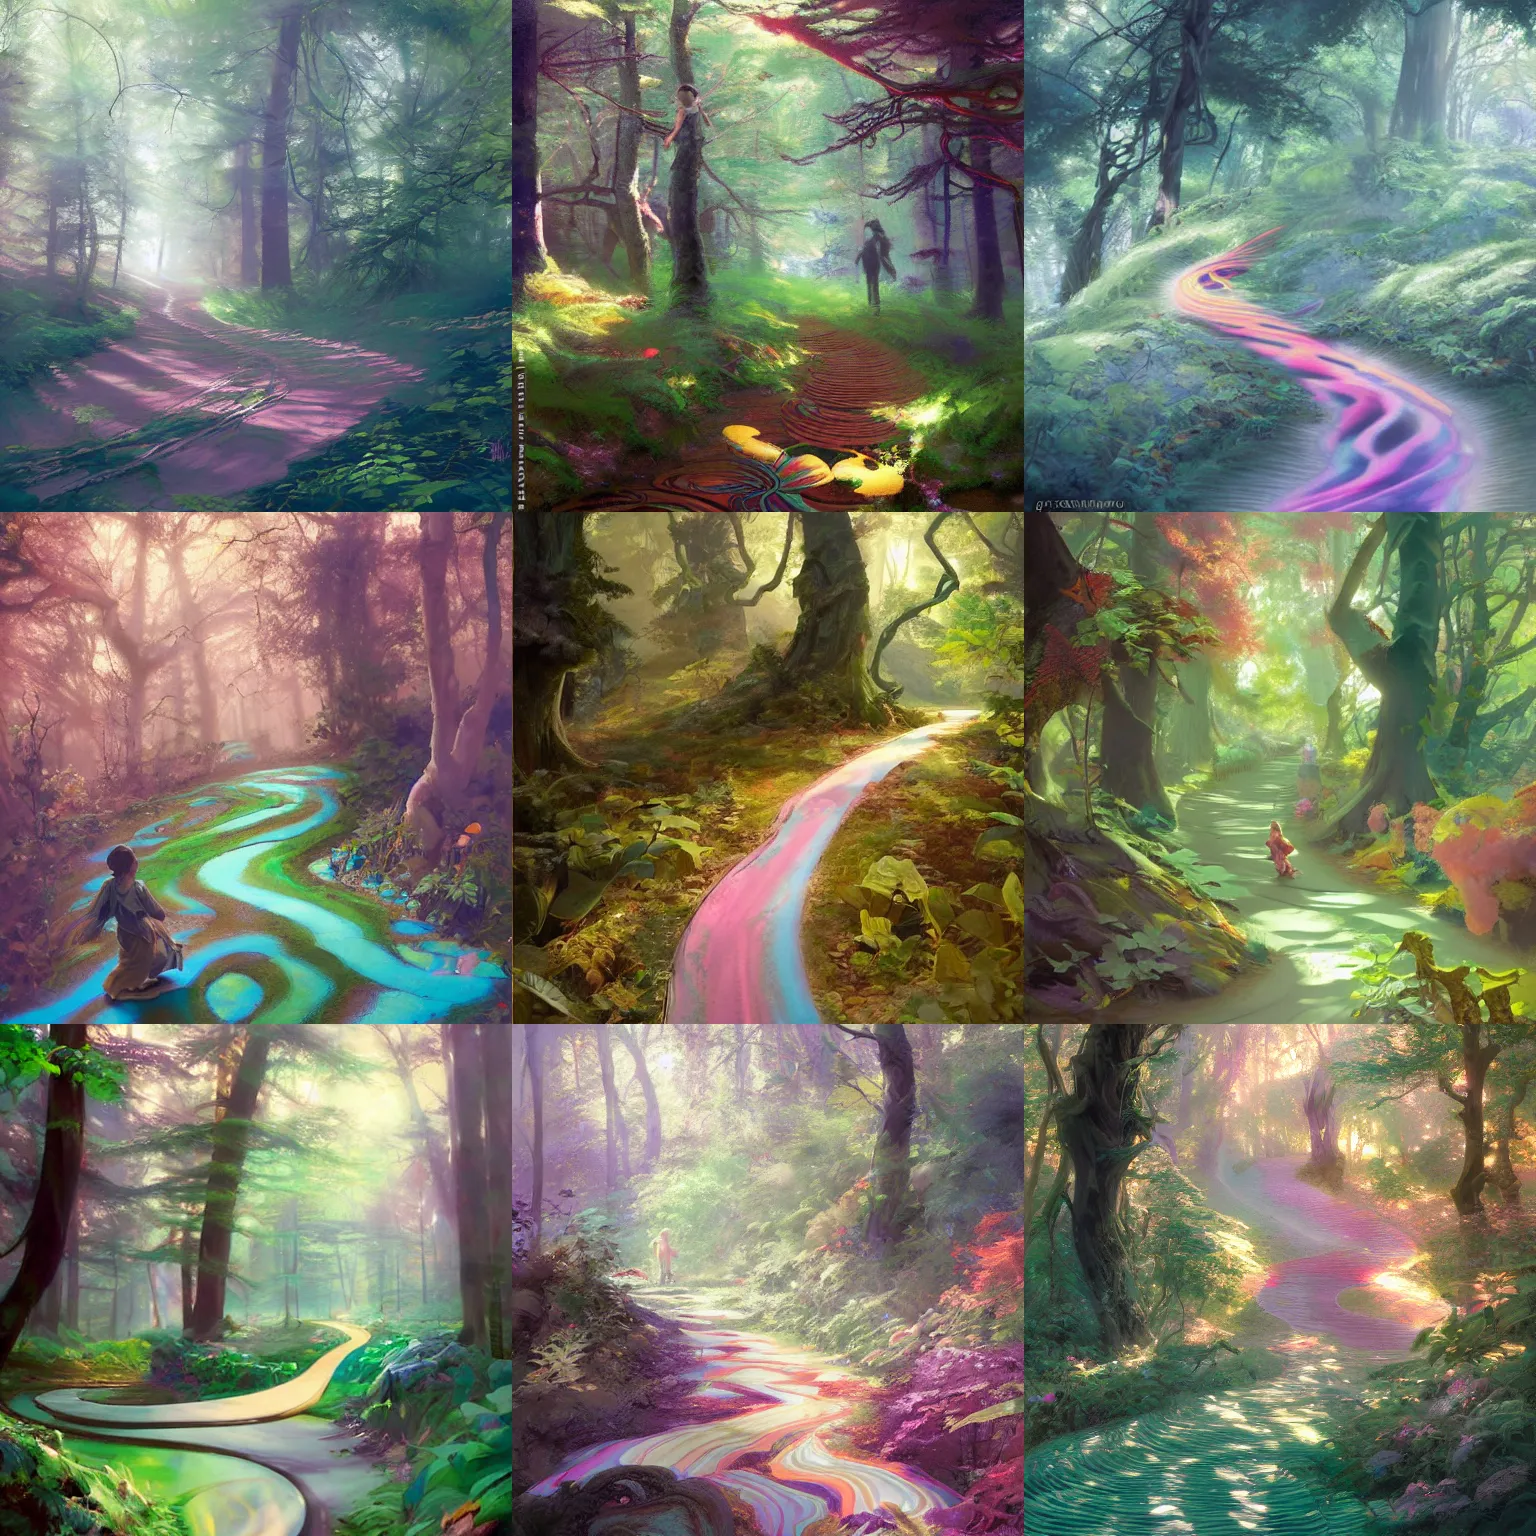 Prompt: winding path in the forest after taking psilocybin mushrooms, colorful swirly magic ripples, pastel colors, by greg manchess, huang guangjian, gil elvgren, sachin teng, greg rutkowski, jesper ejsing